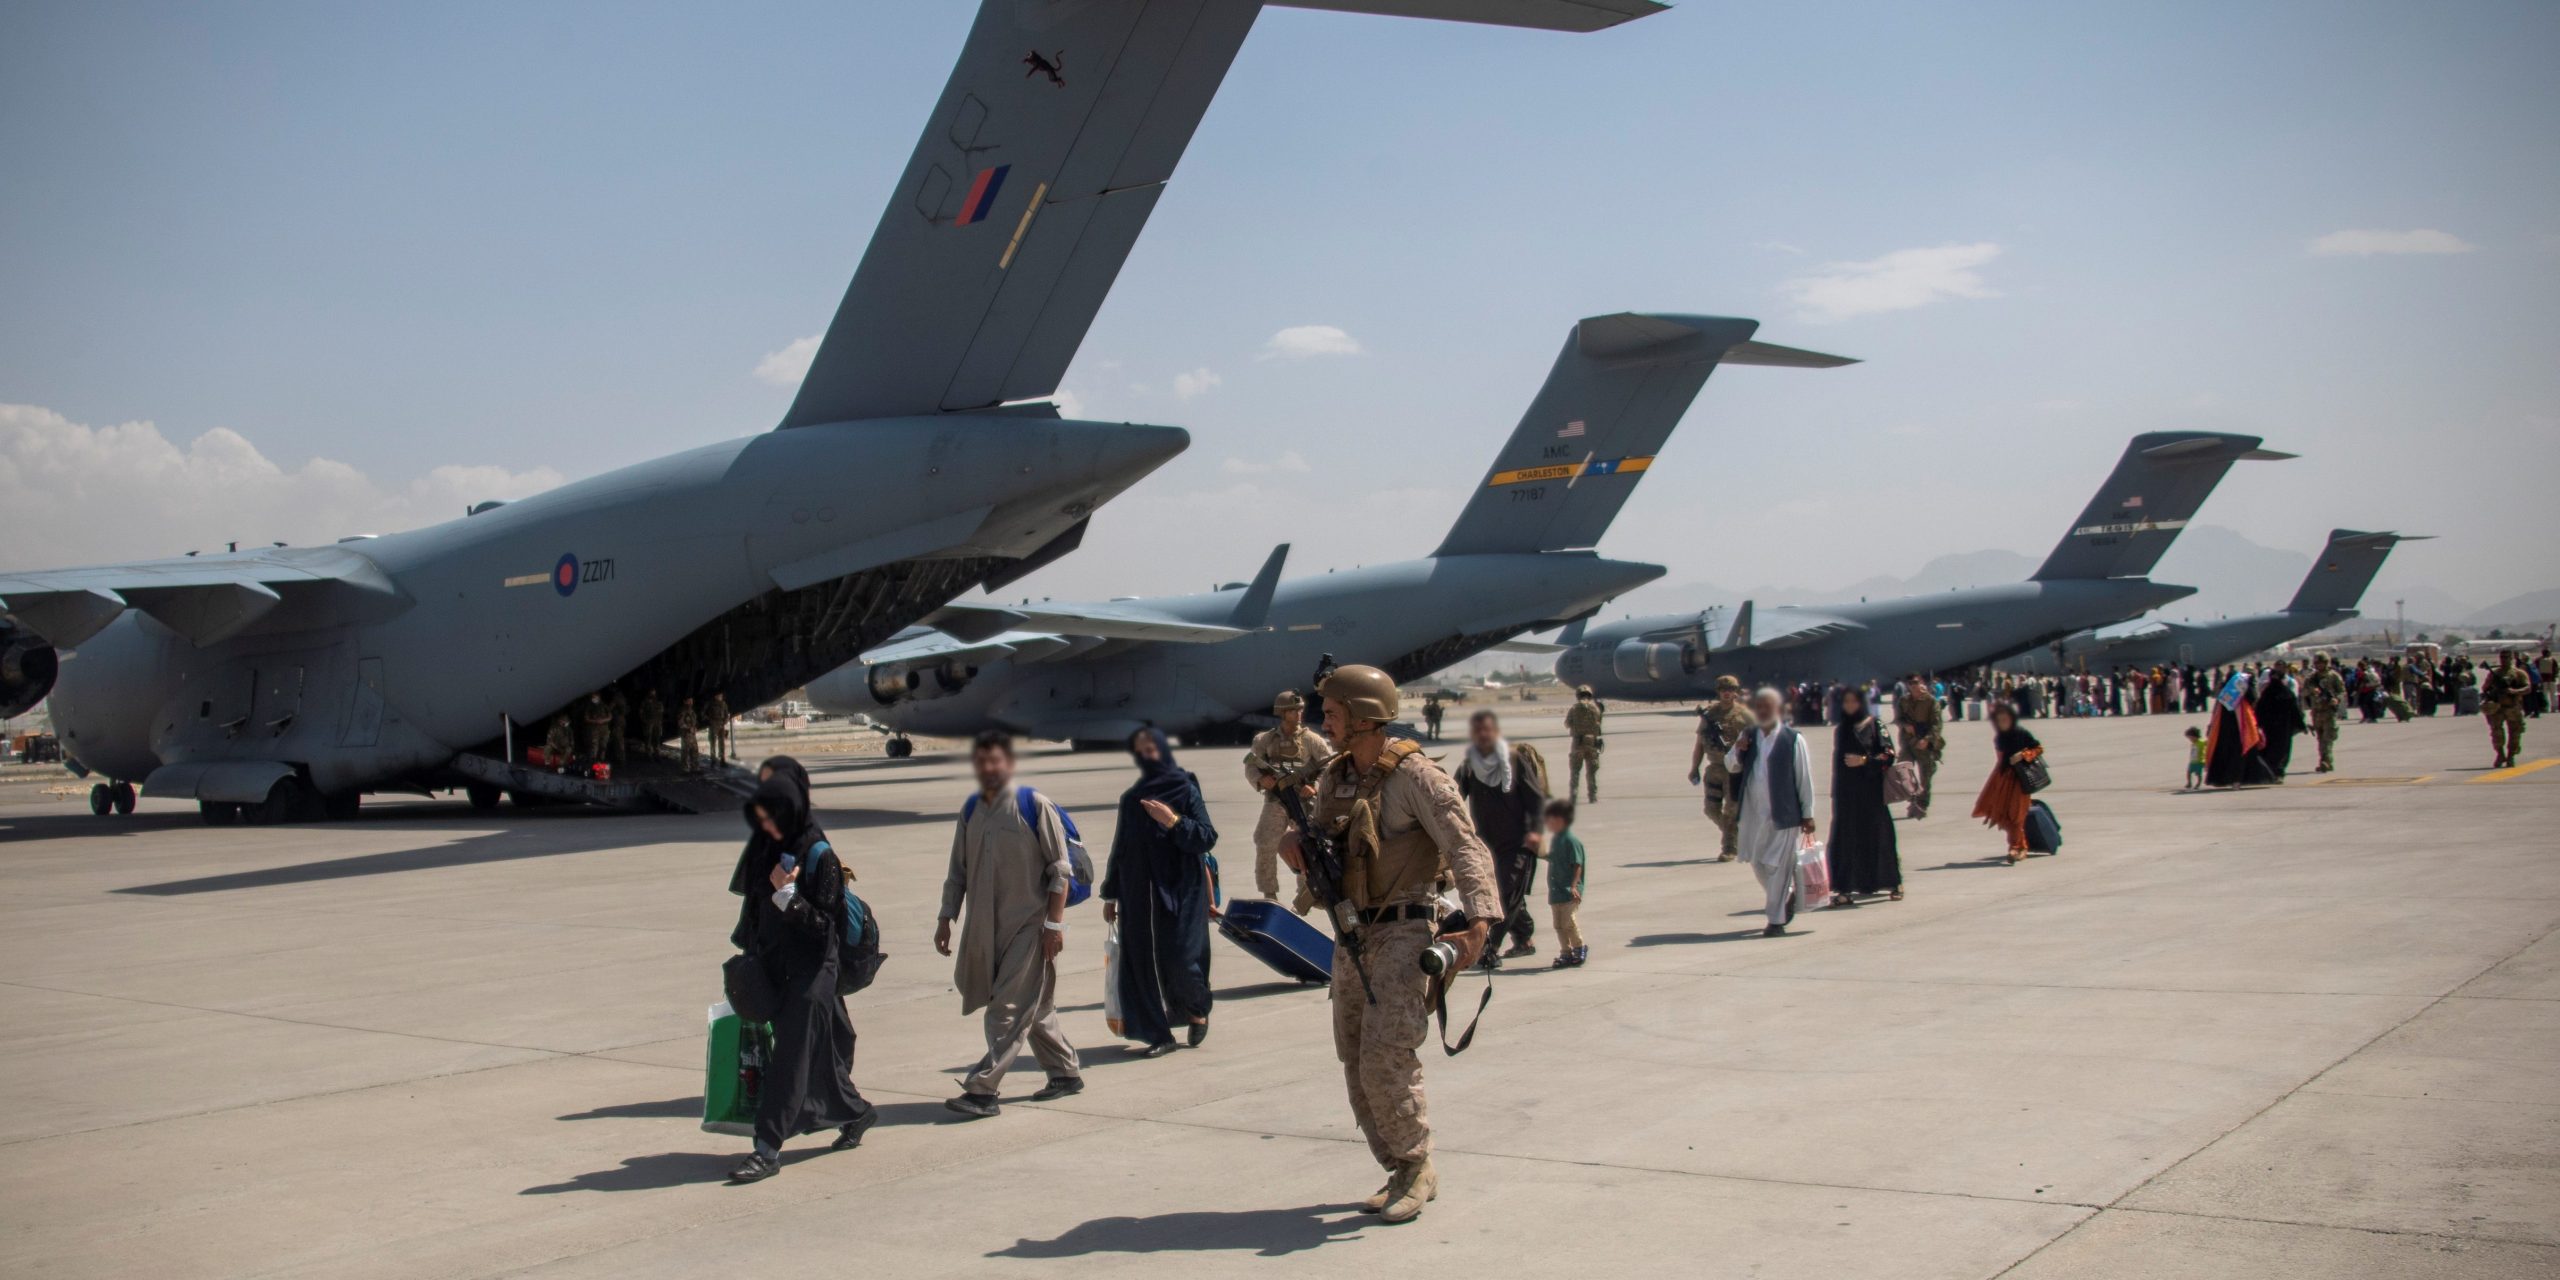 UK Afghanistan evacuation